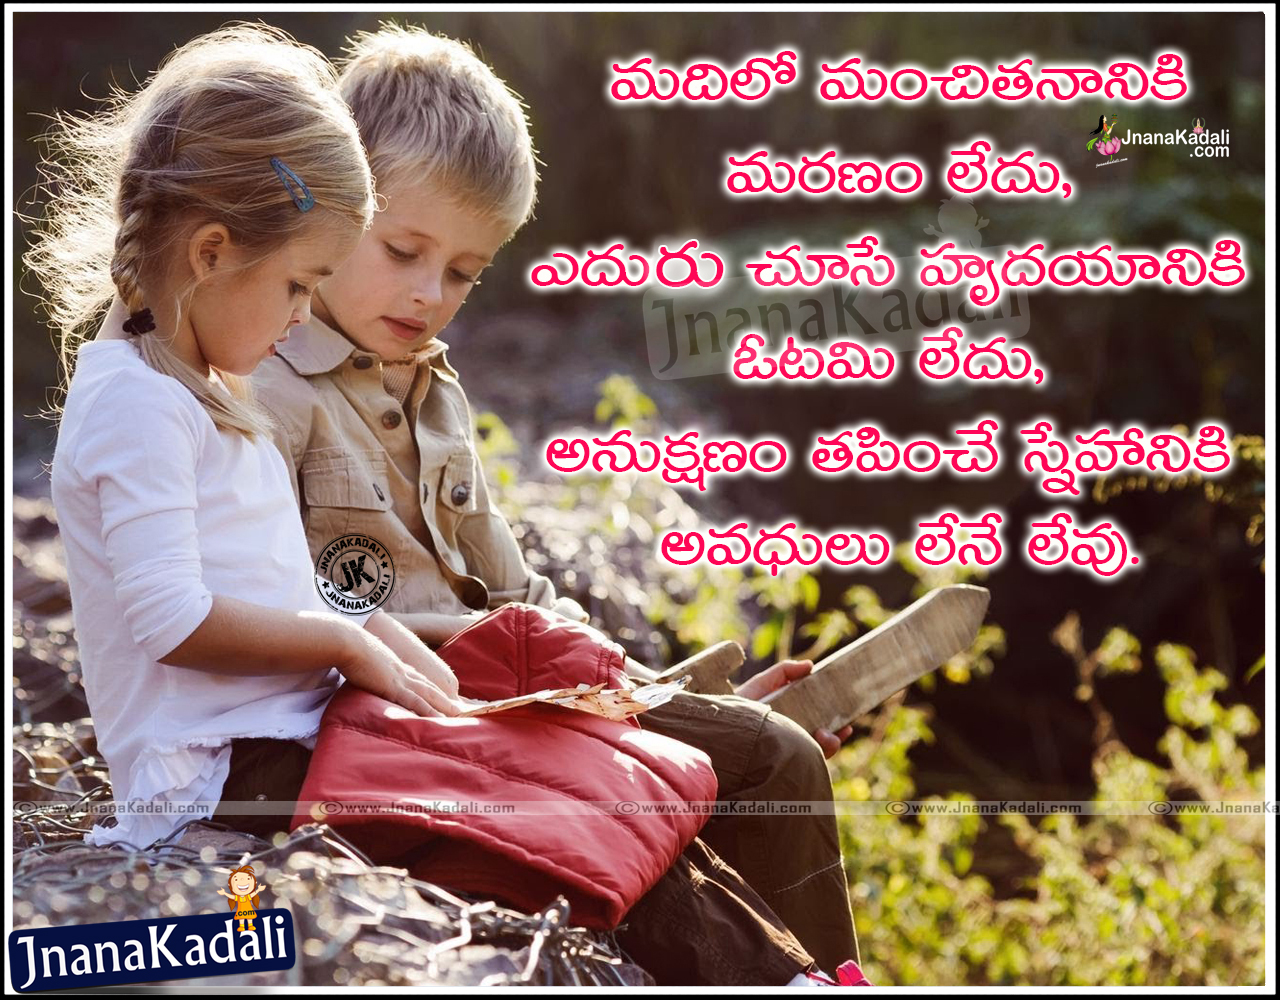 Beautiful friendship quotes in telugu | JNANA KADALI.COM |Telugu ...